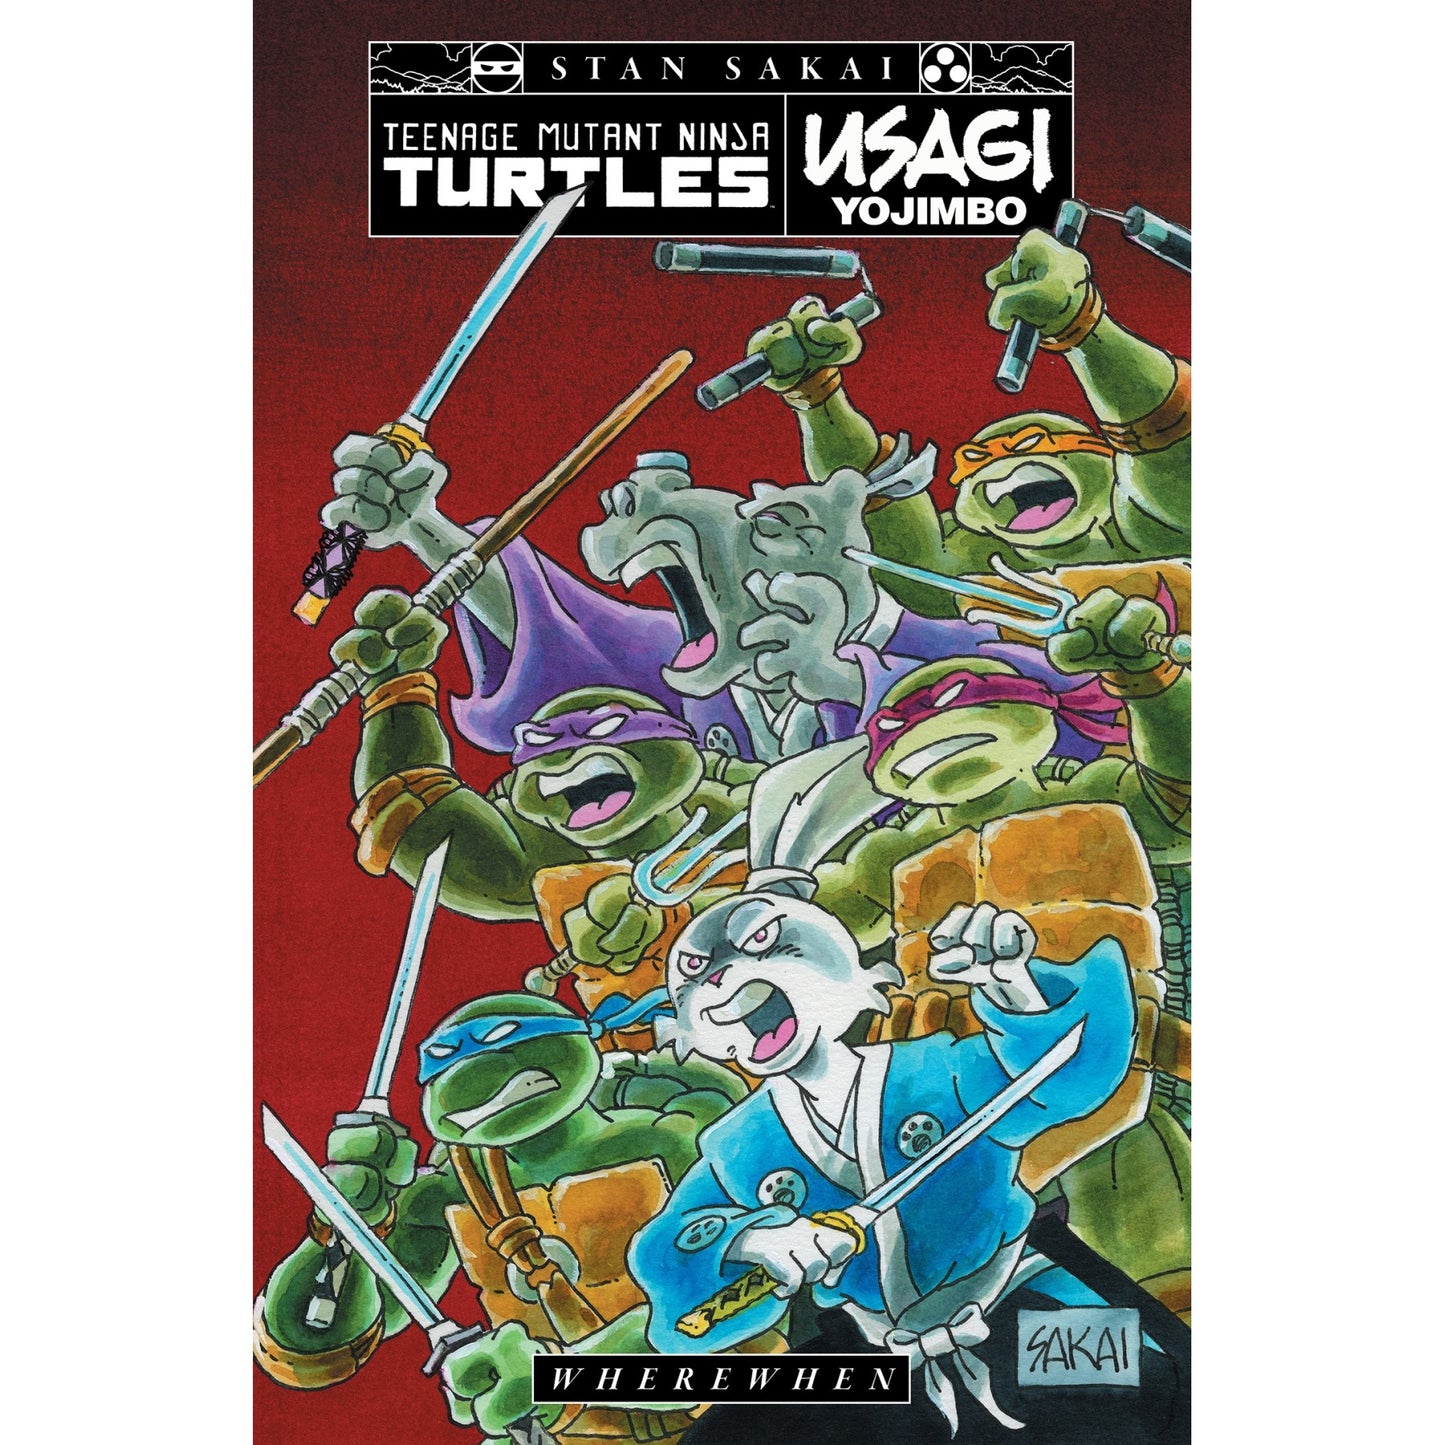 Teenage Mutant Ninja Turtles/Usagi Yojimbo WhereWhen